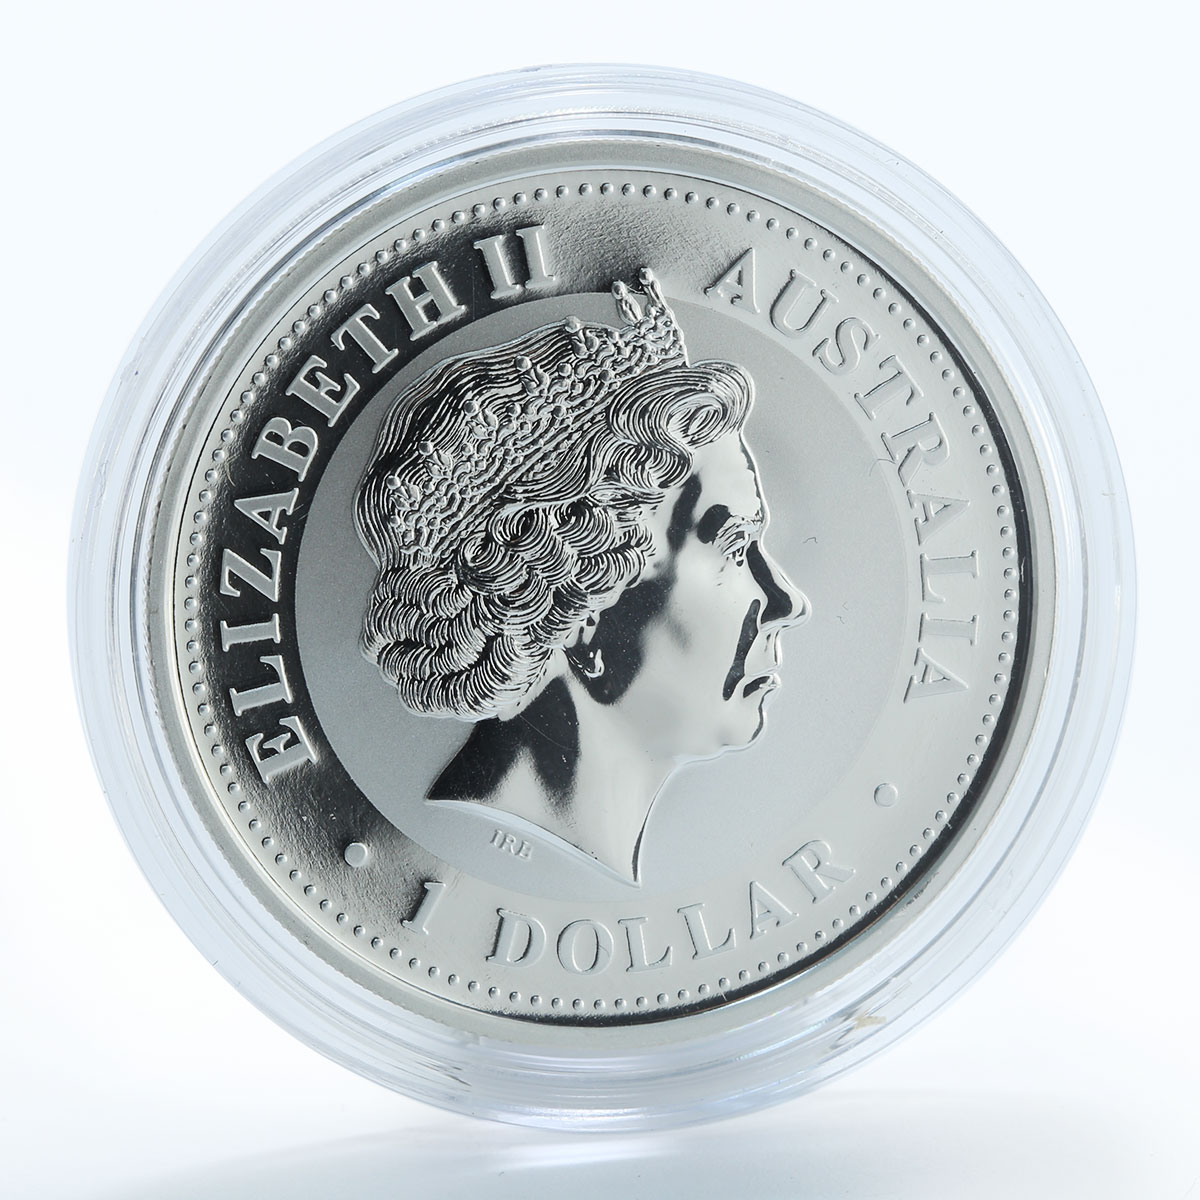 Australia 1 dollar Year of the Dog Lunnar Series I 1 oz Silver Coin 2006